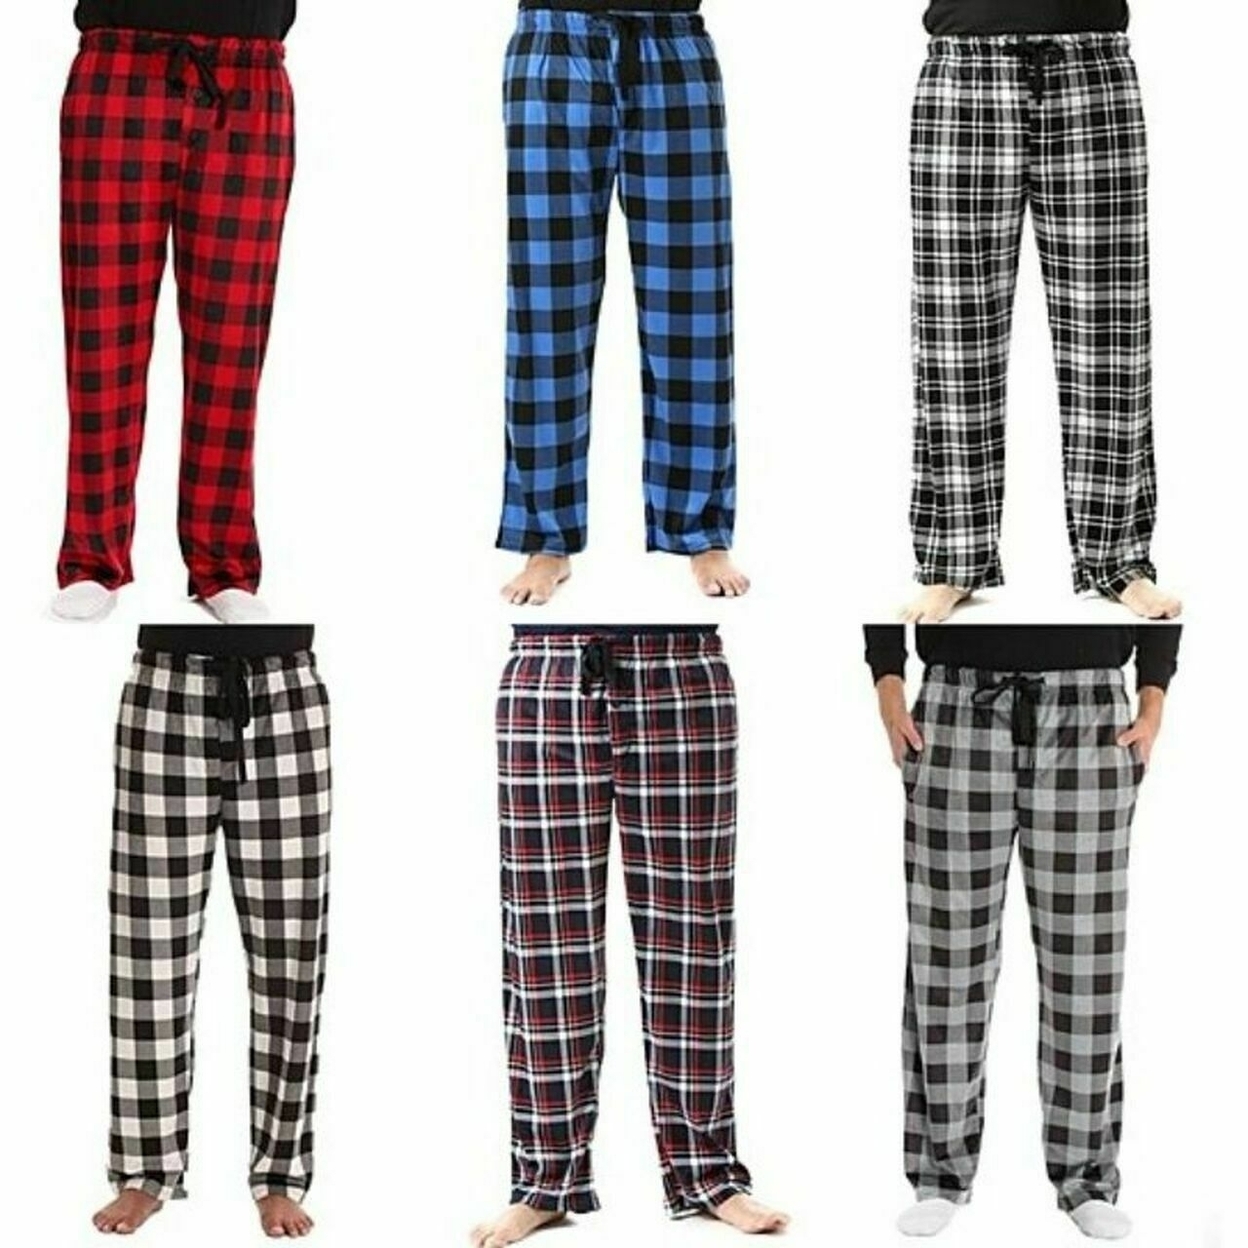 Men's Ultra-Soft Cozy Flannel Fleece Plaid Pajama Sleep Bottom Lounge Pants - Black, Large